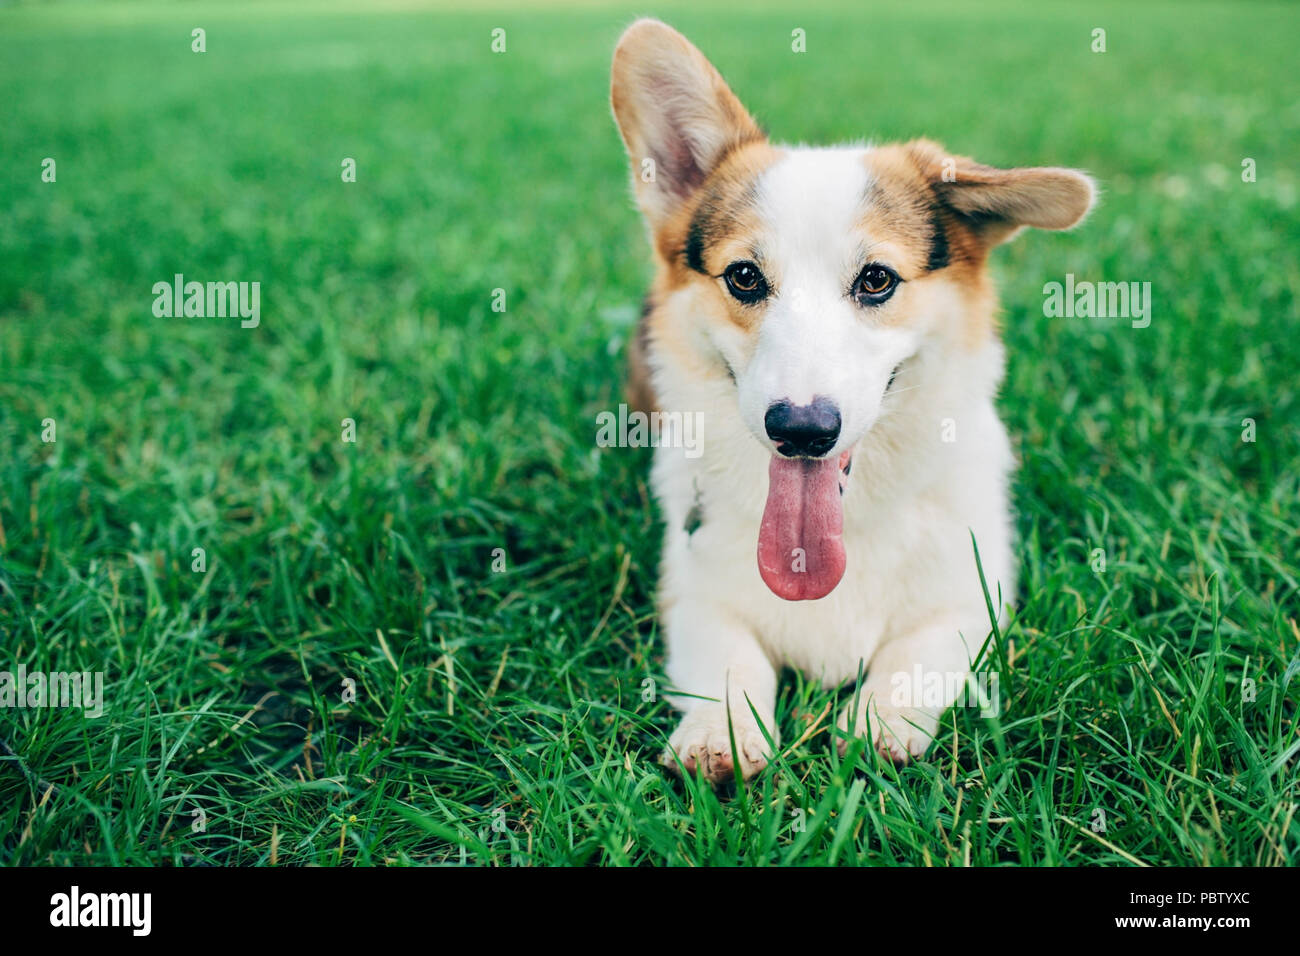 Welsh Corgi dog sitting on grassy field Banque D'Images